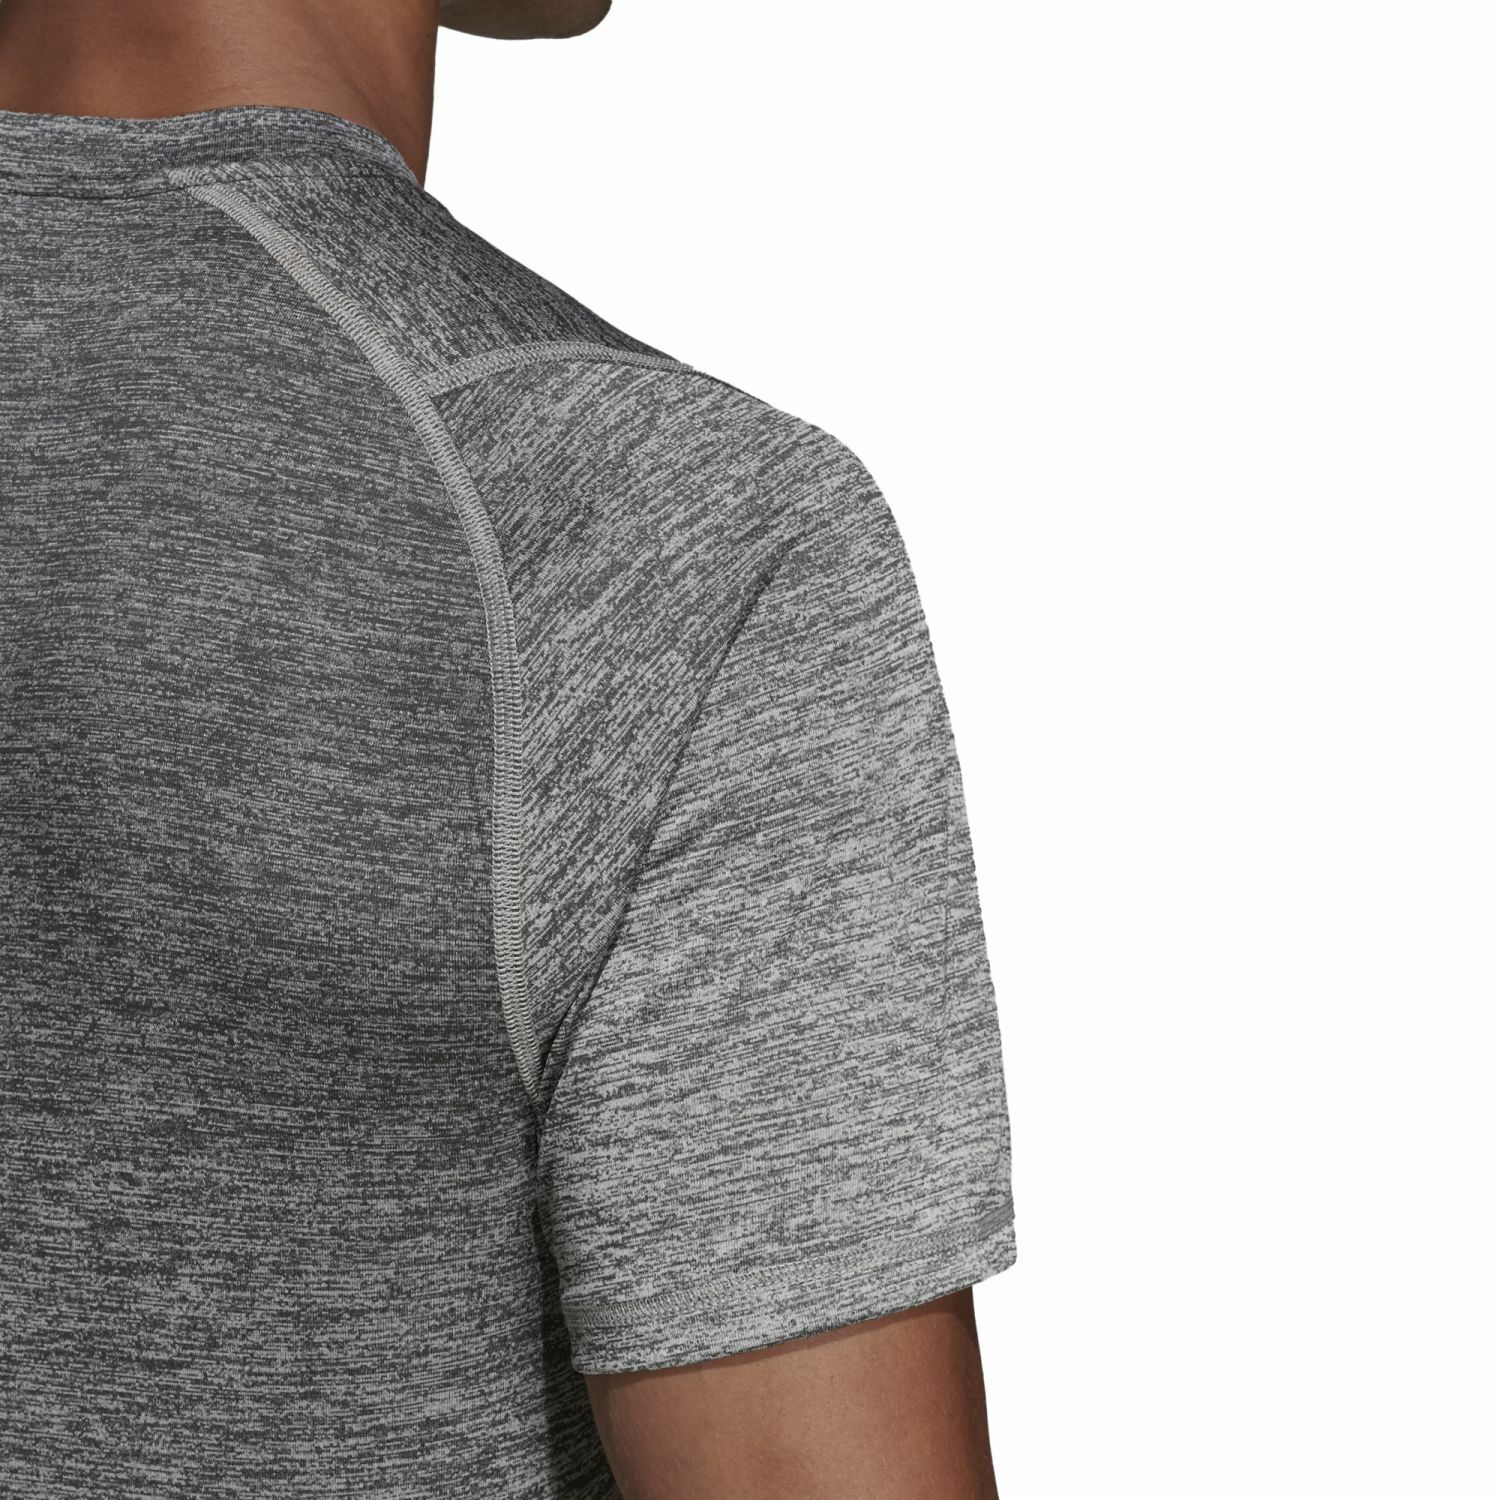 Adidas Men's Freelift 360 Gradient Graphic T-Shirt